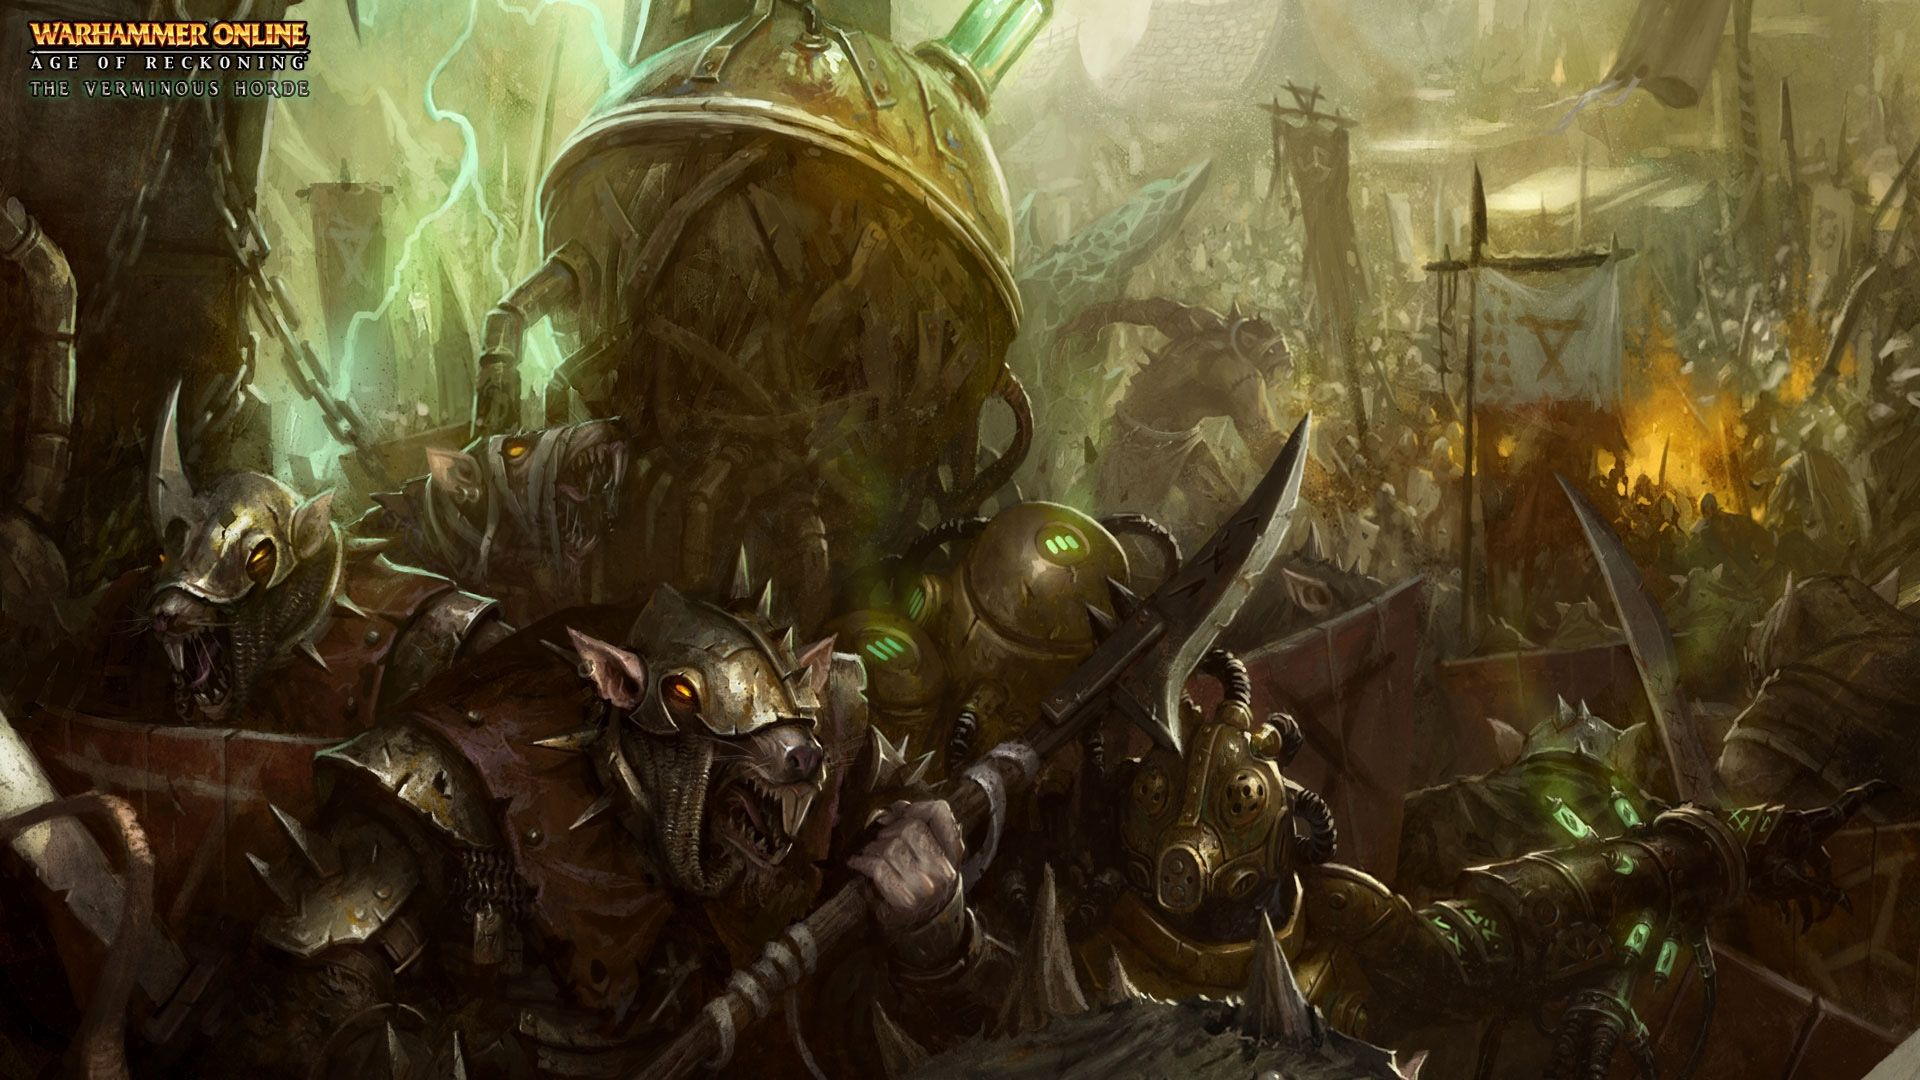 1920x1080 Video Game Warhammer Online: Age Of Reckoning Wallpaper | Warhammer online, Warhammer, Warhammer fantasy